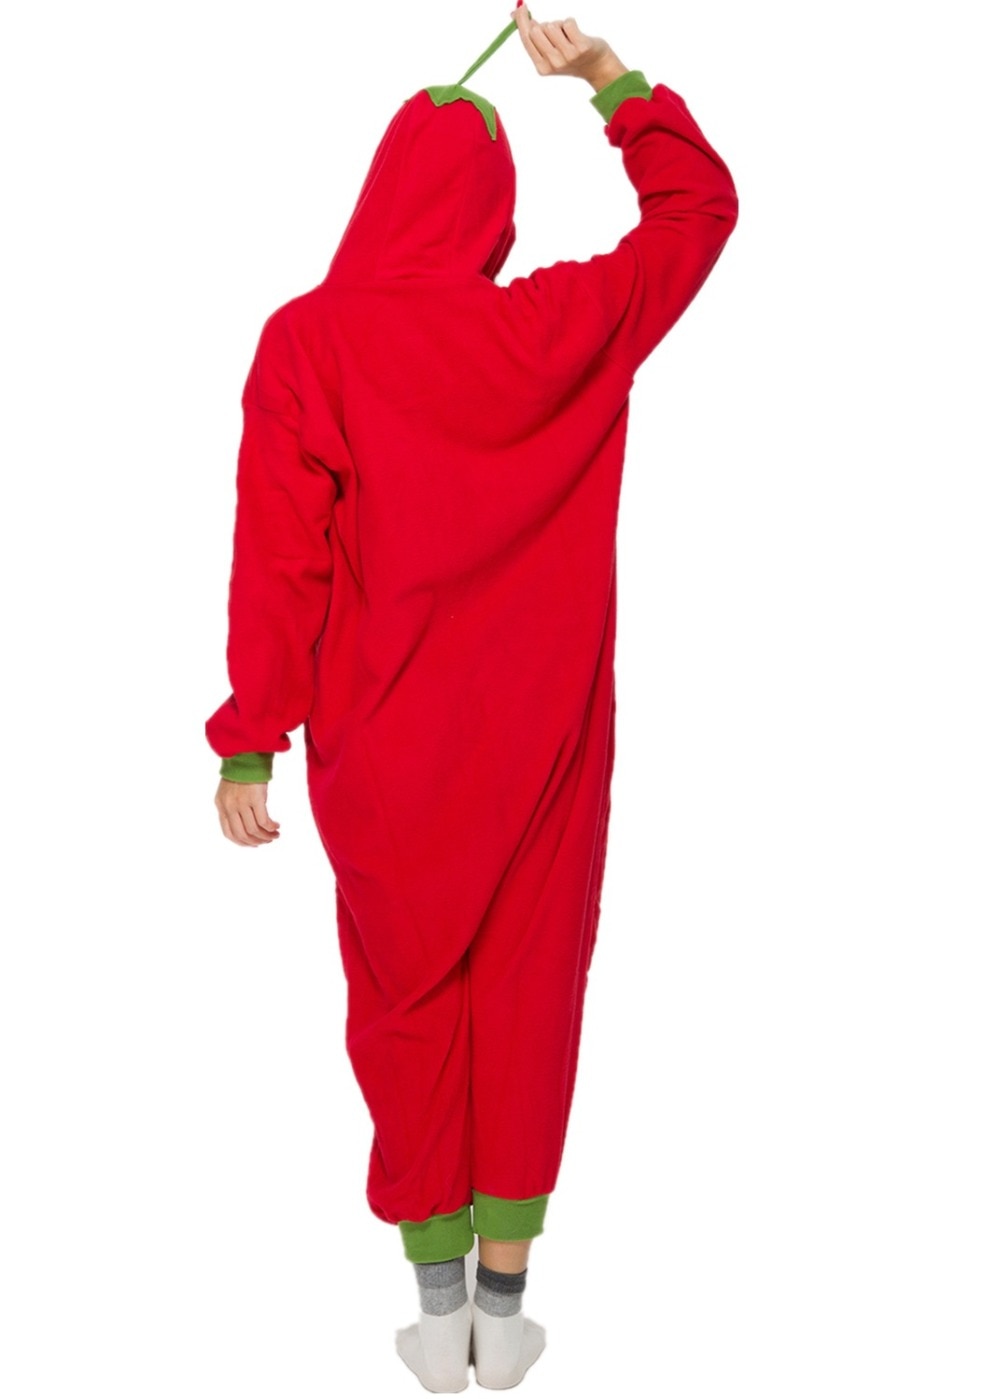 HKSNG Adult Red Pepper Pajamas Fleece Cartoon Tomato Onesies Halloween Party Cosplay Costumes Jumpsuits Pyjamas Kigurumi